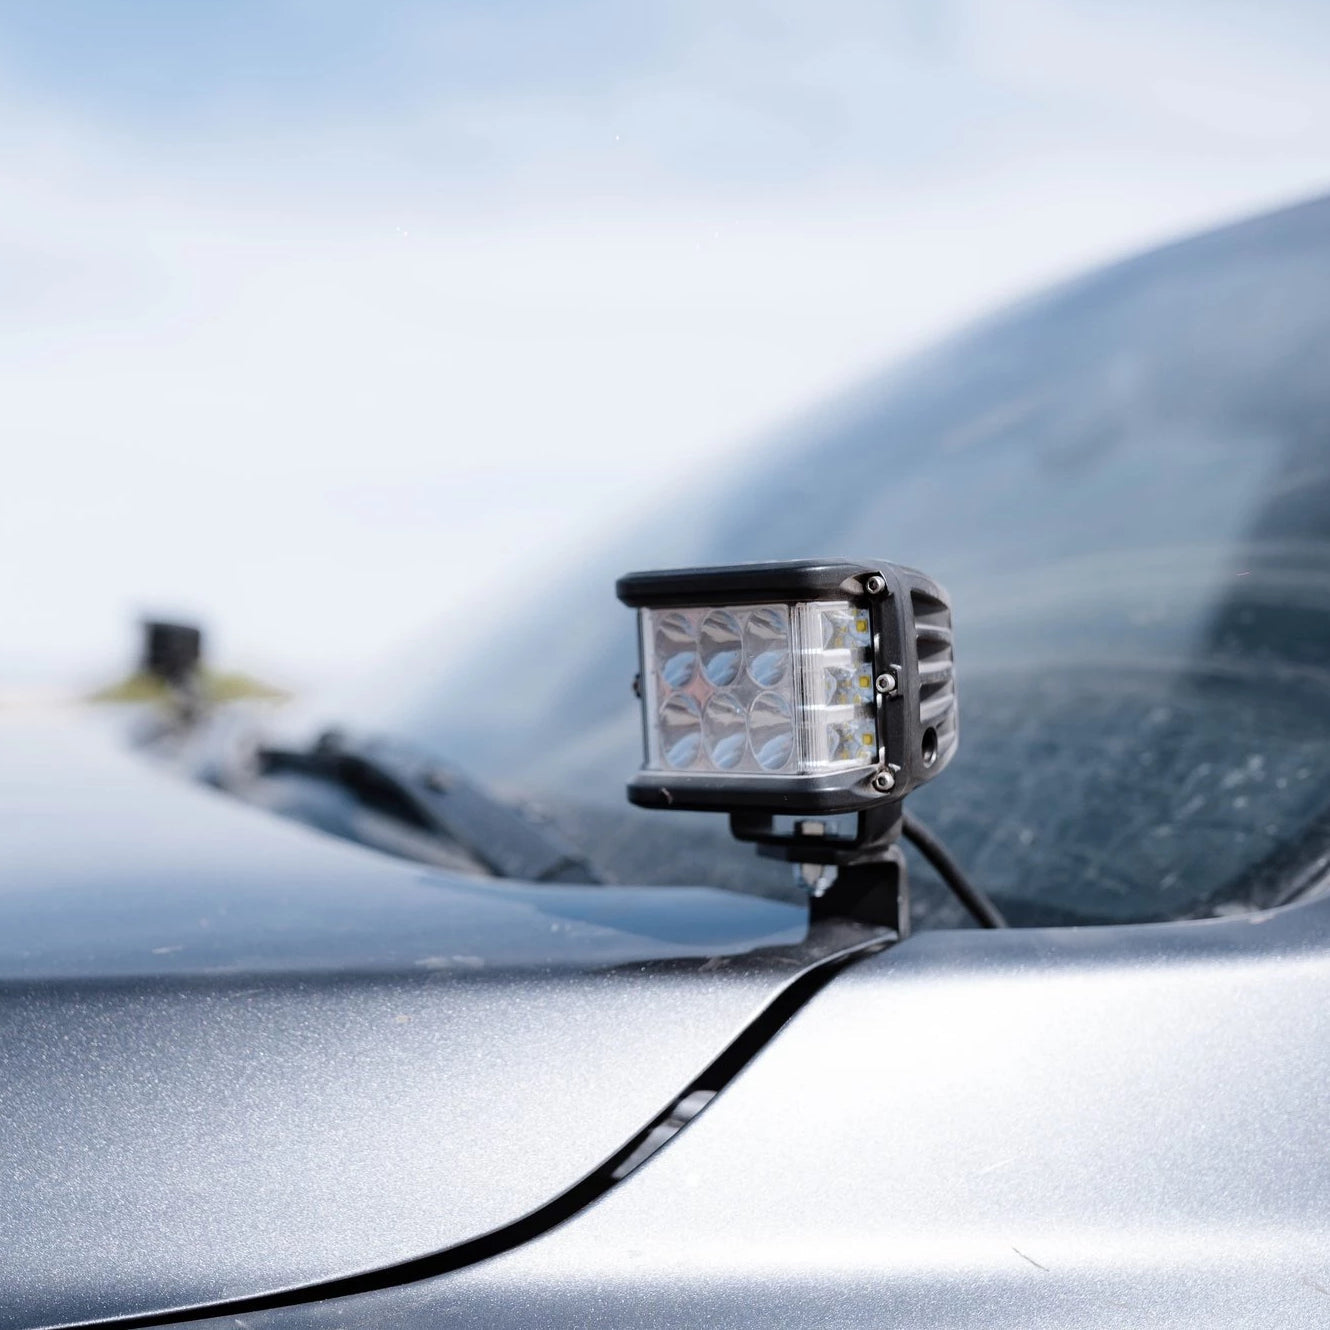 Cali Raised LED Low Profile Ditch Light with Mounting Bracket Toyota Tacoma